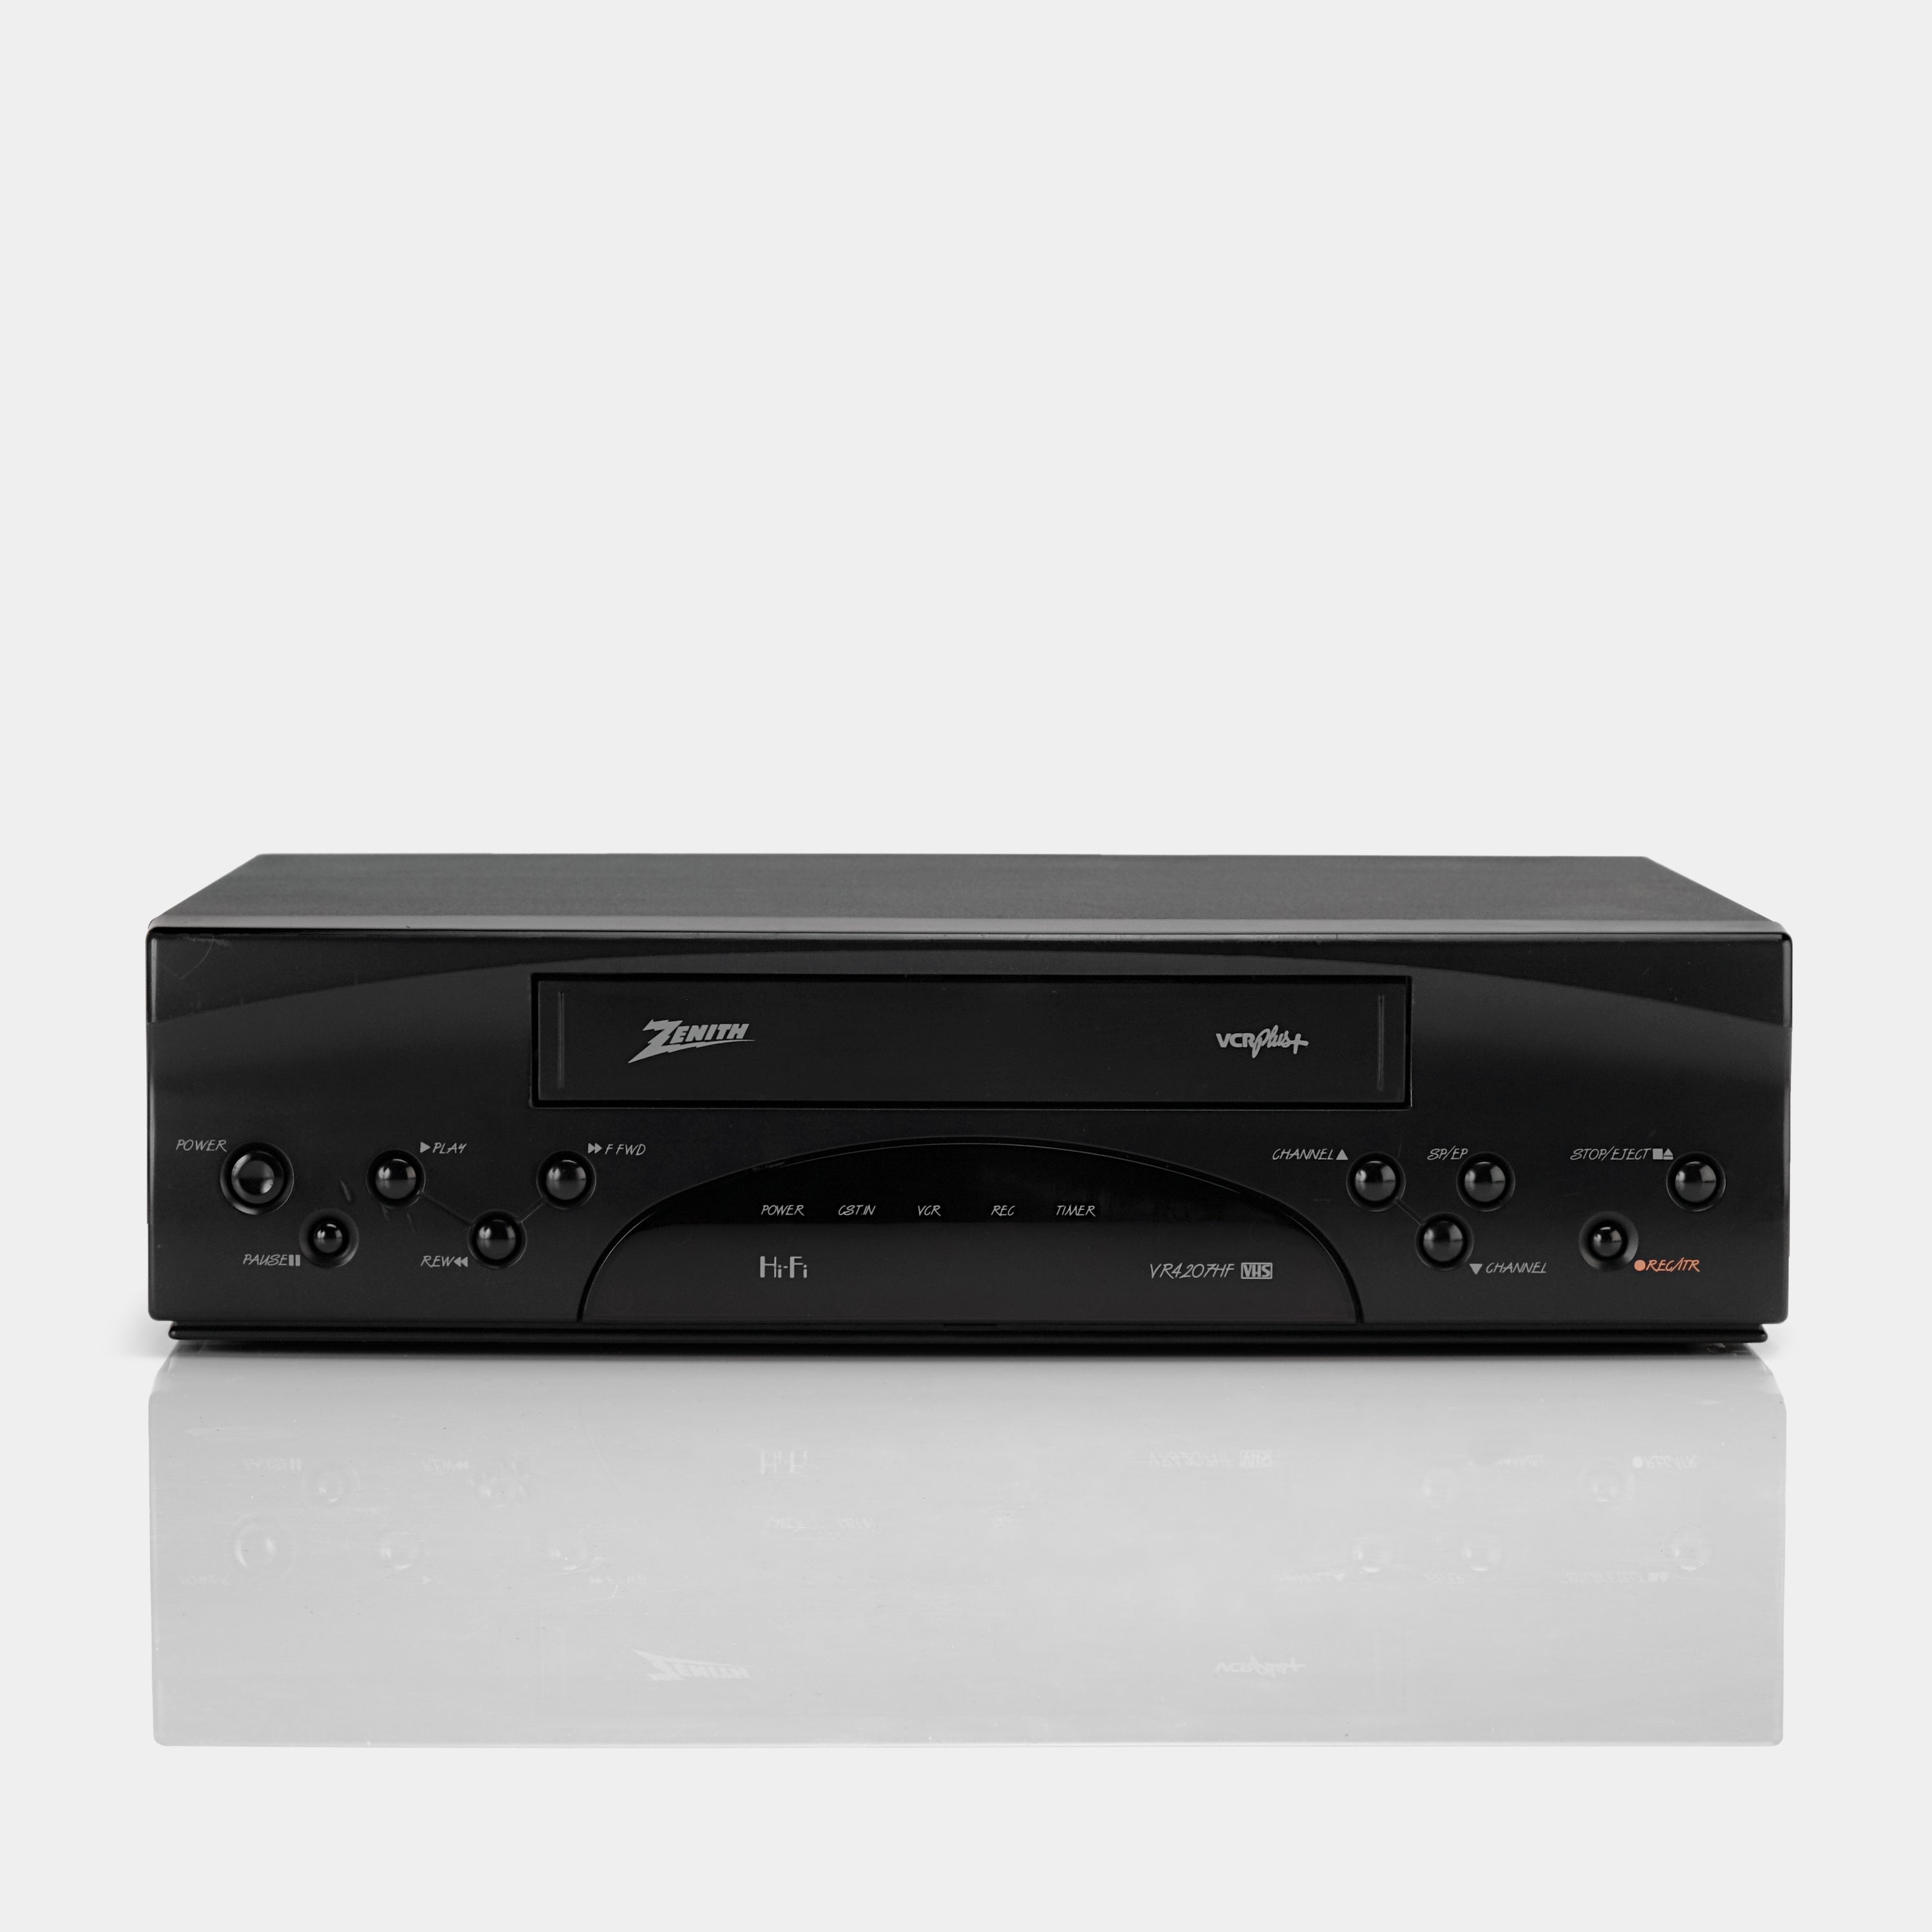 Zenith VR4207HF VCR VHS Player